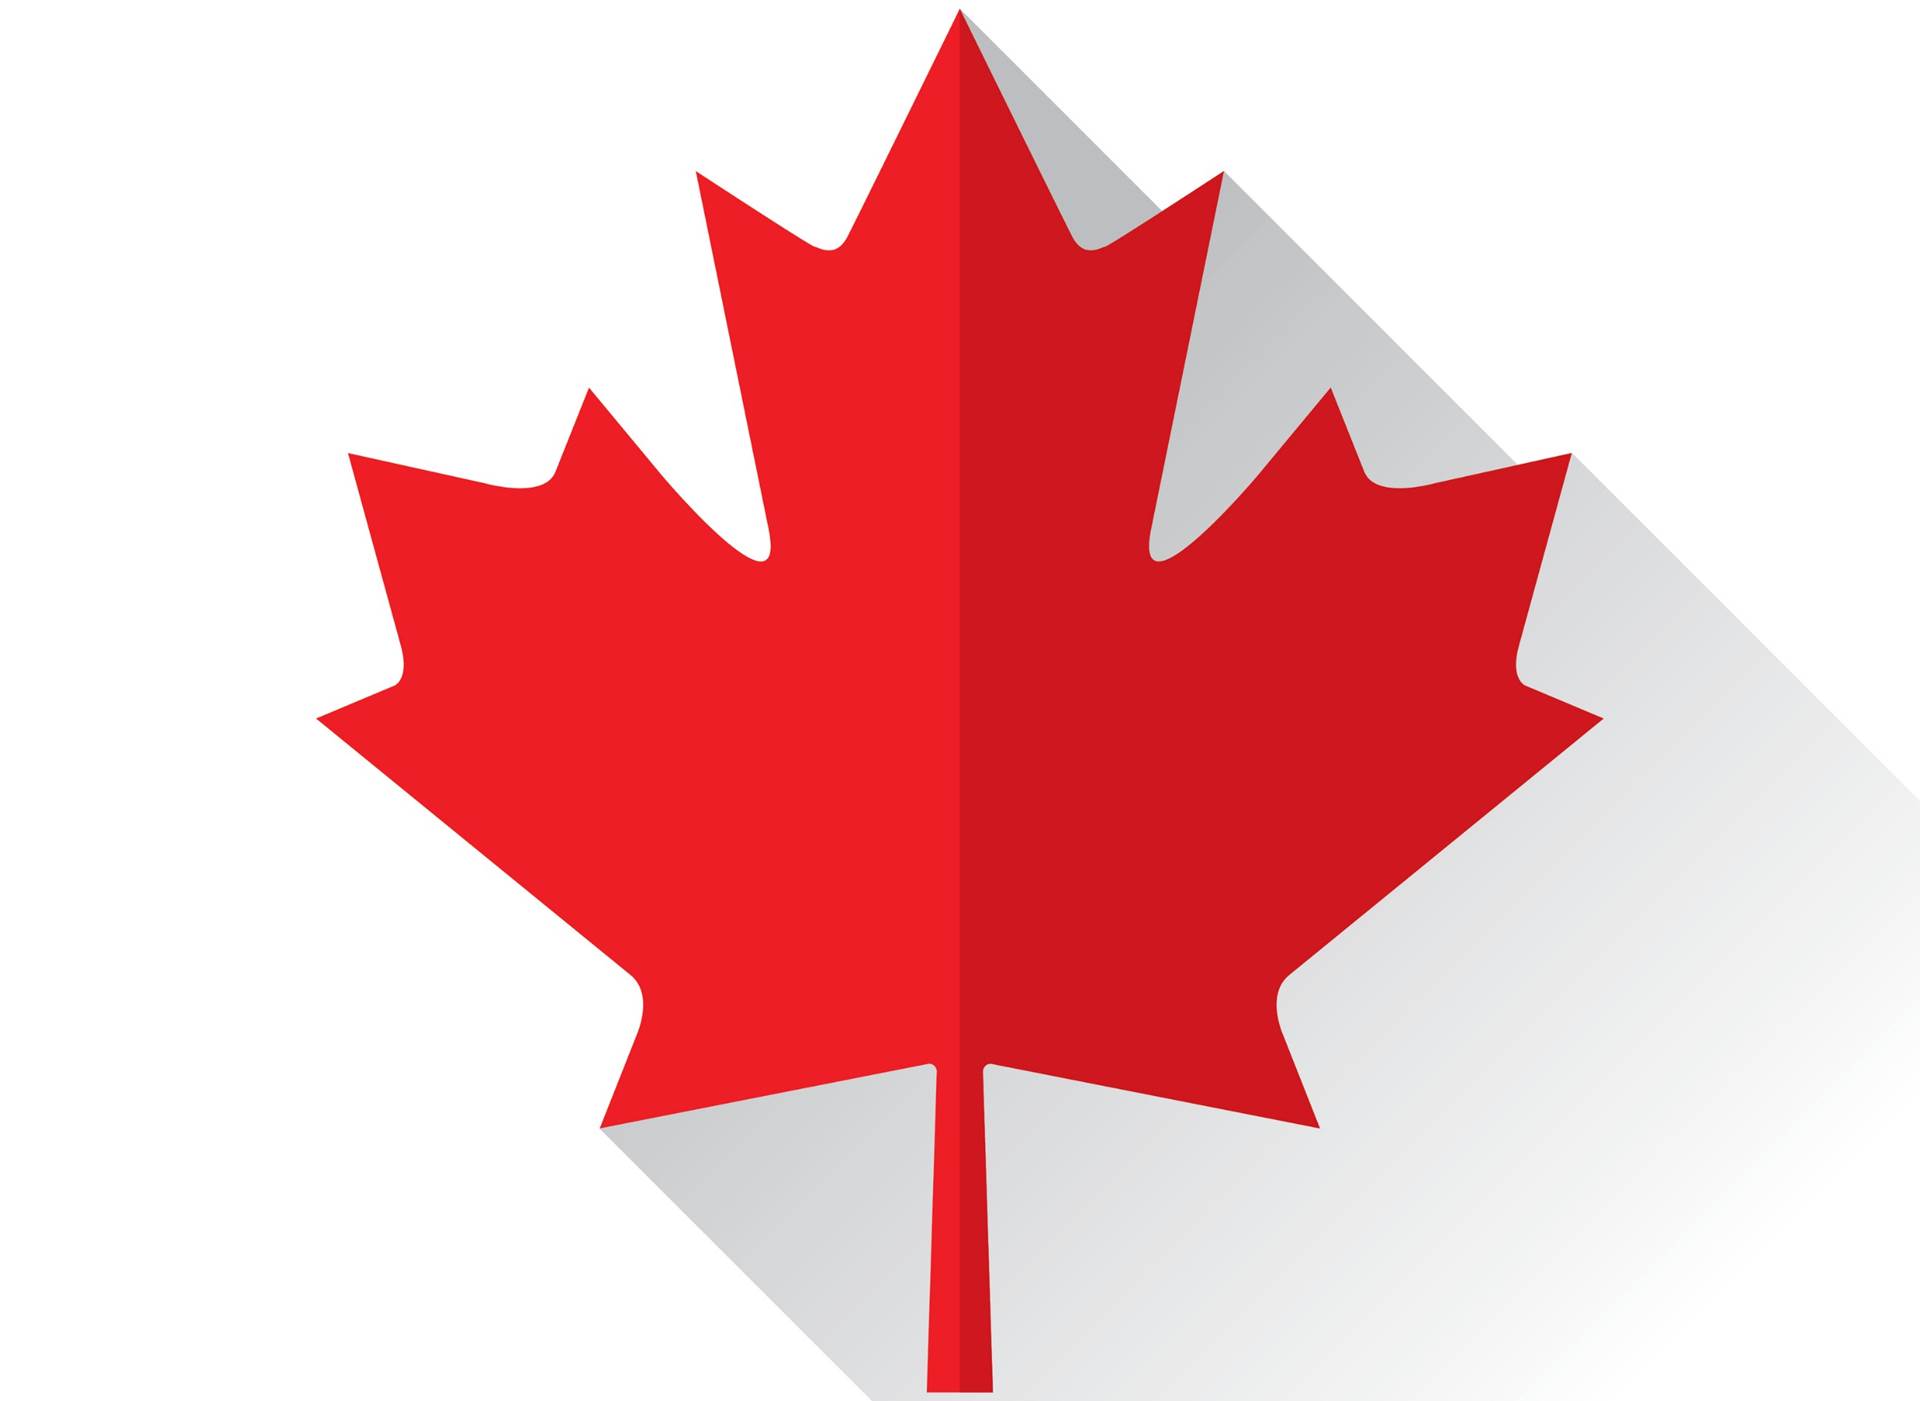 canadian maple leaf